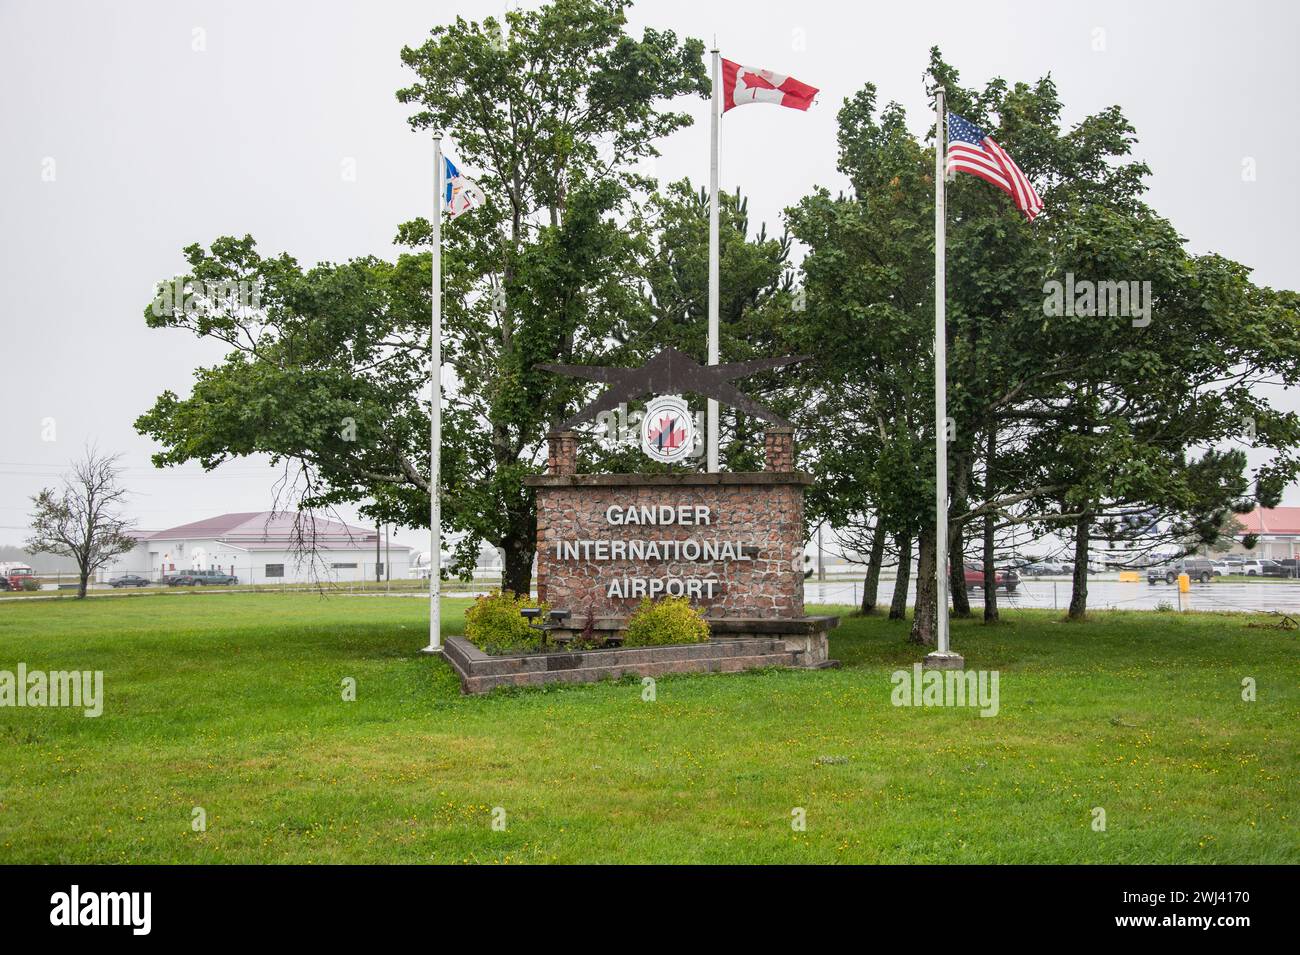 Welcome to Gander International Airport sign in Gander, Newfoundland & Labrador, Canada Stock Photo